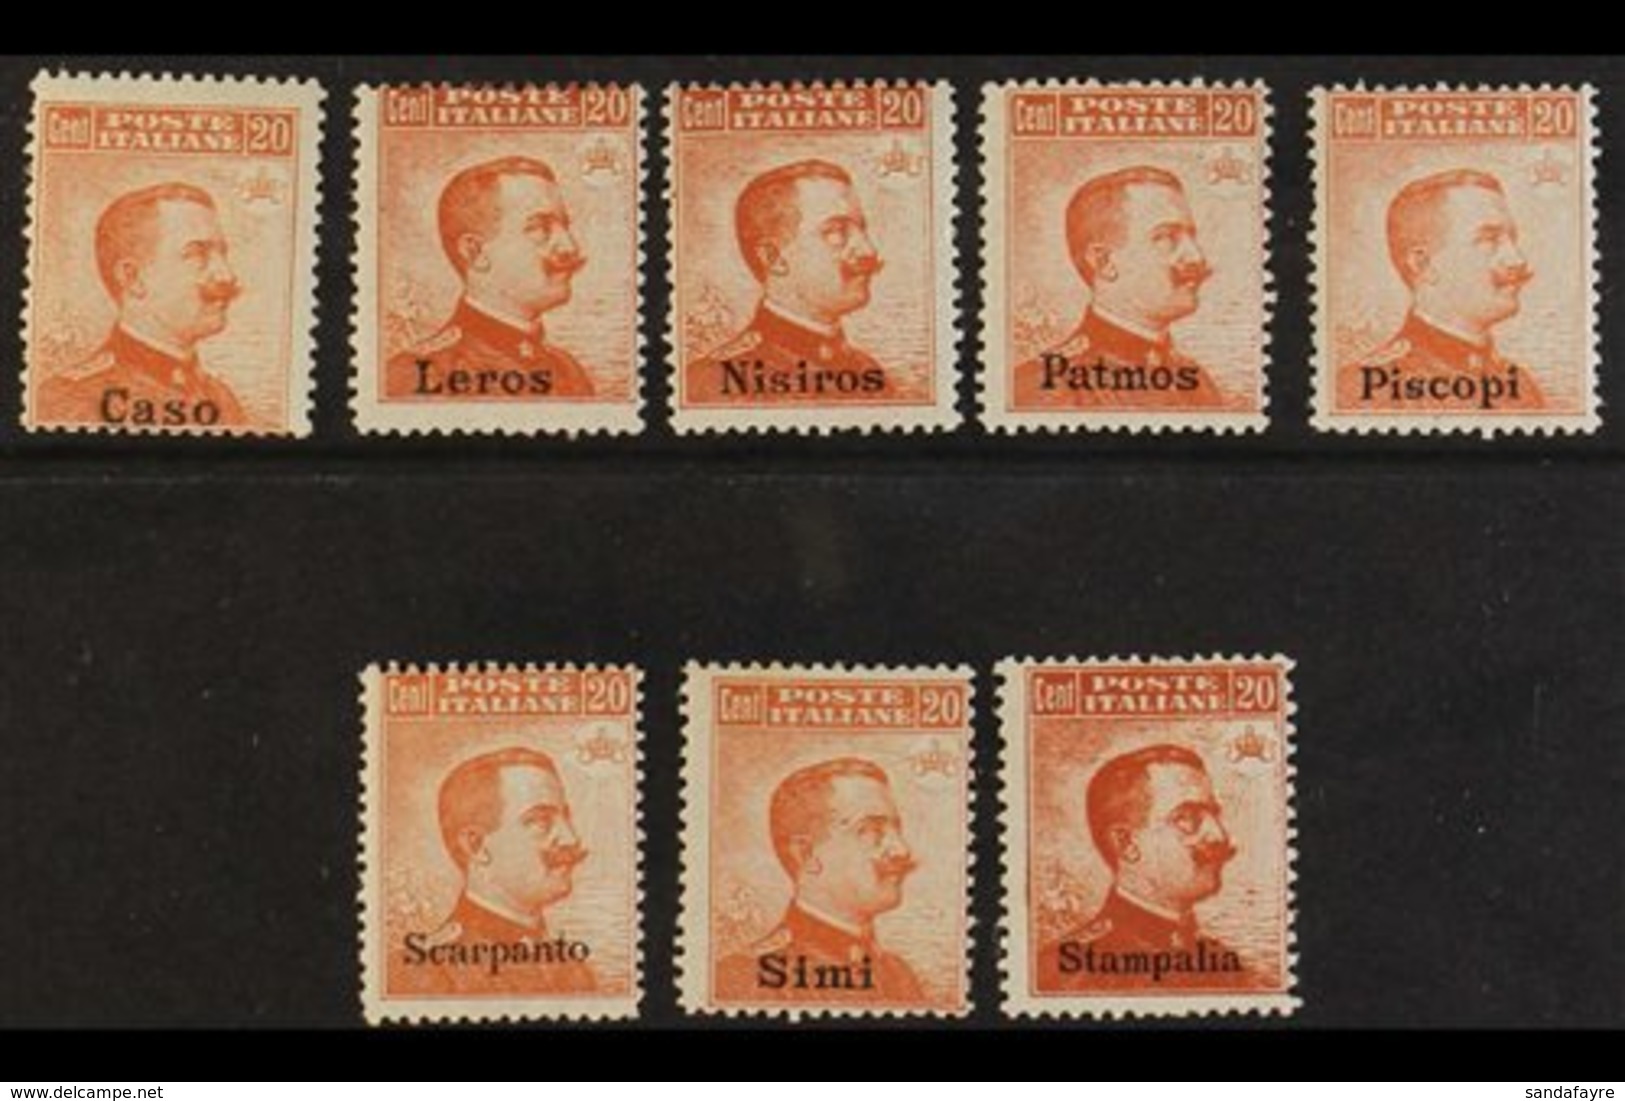 1917 20c Orange, No Watermark Ovptd Issues From Caso, Leros, Nisiros, Patmos, Piscopi, Scarpanto, Simi & Stampalia, Sass - Egeo